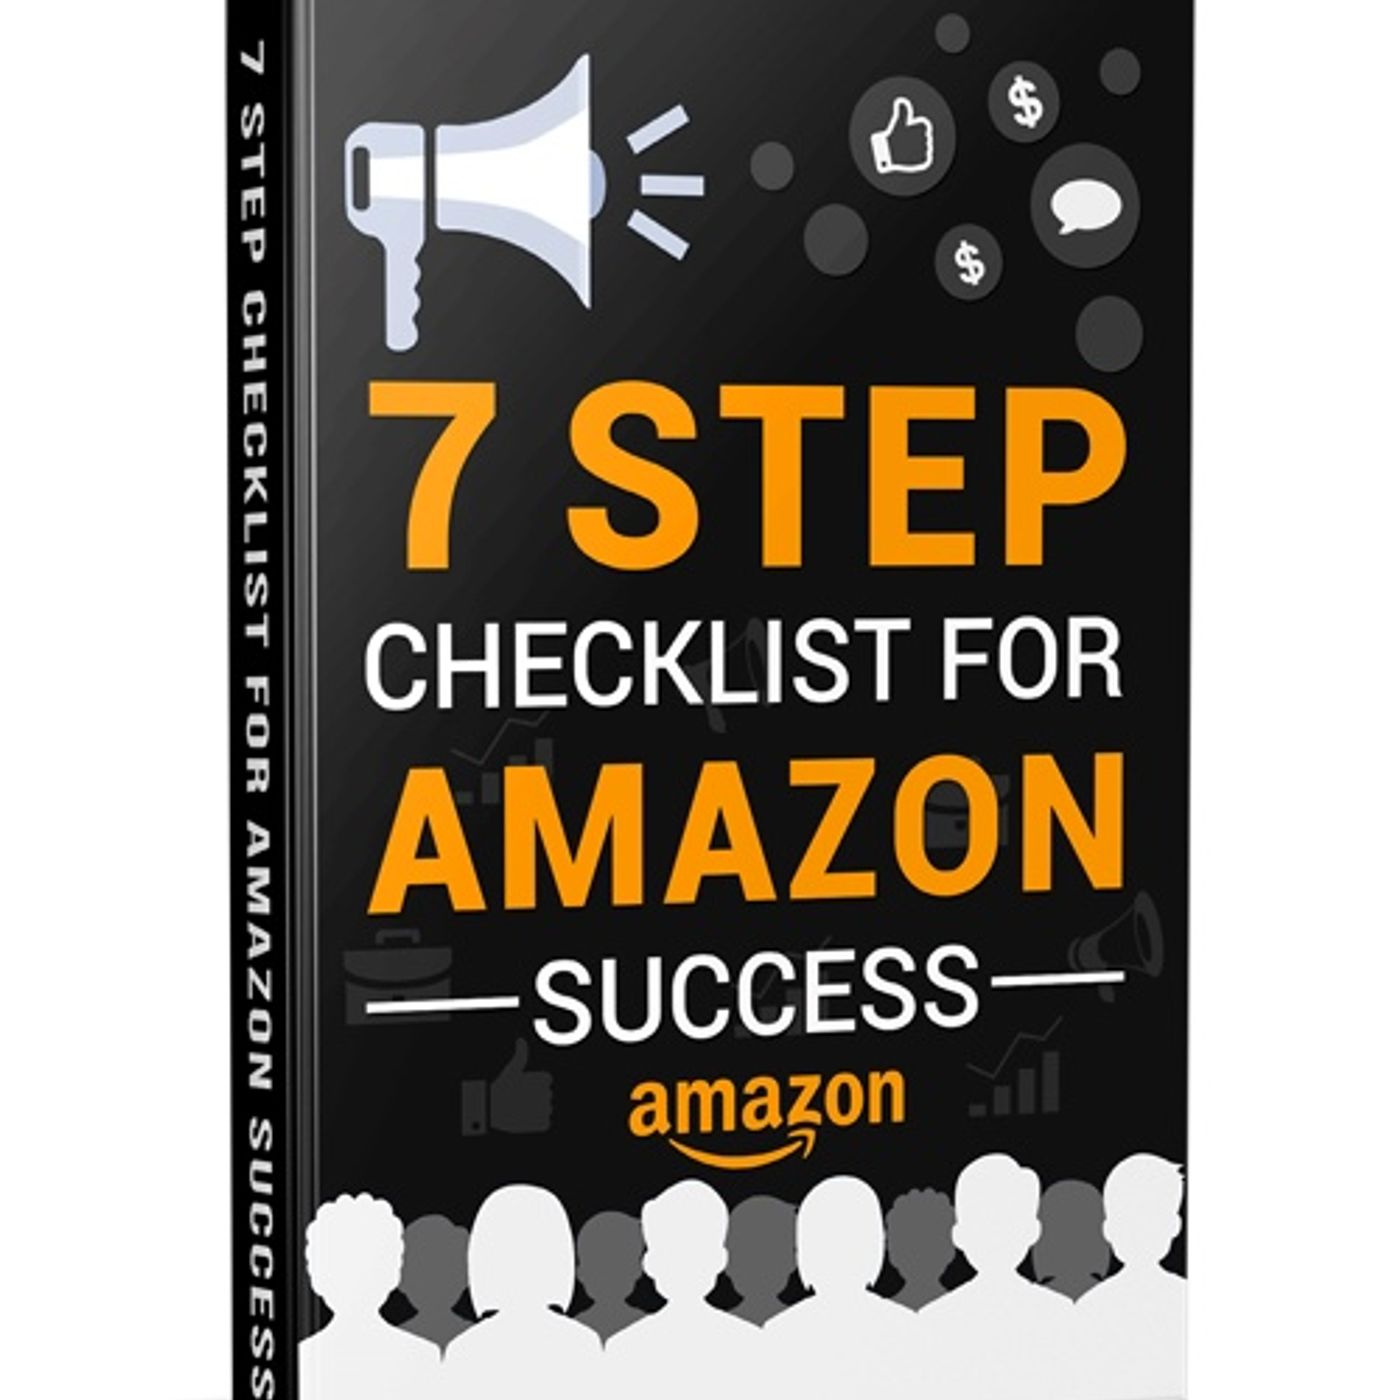 Amazon Product Listing Optimization - CoachAMZ